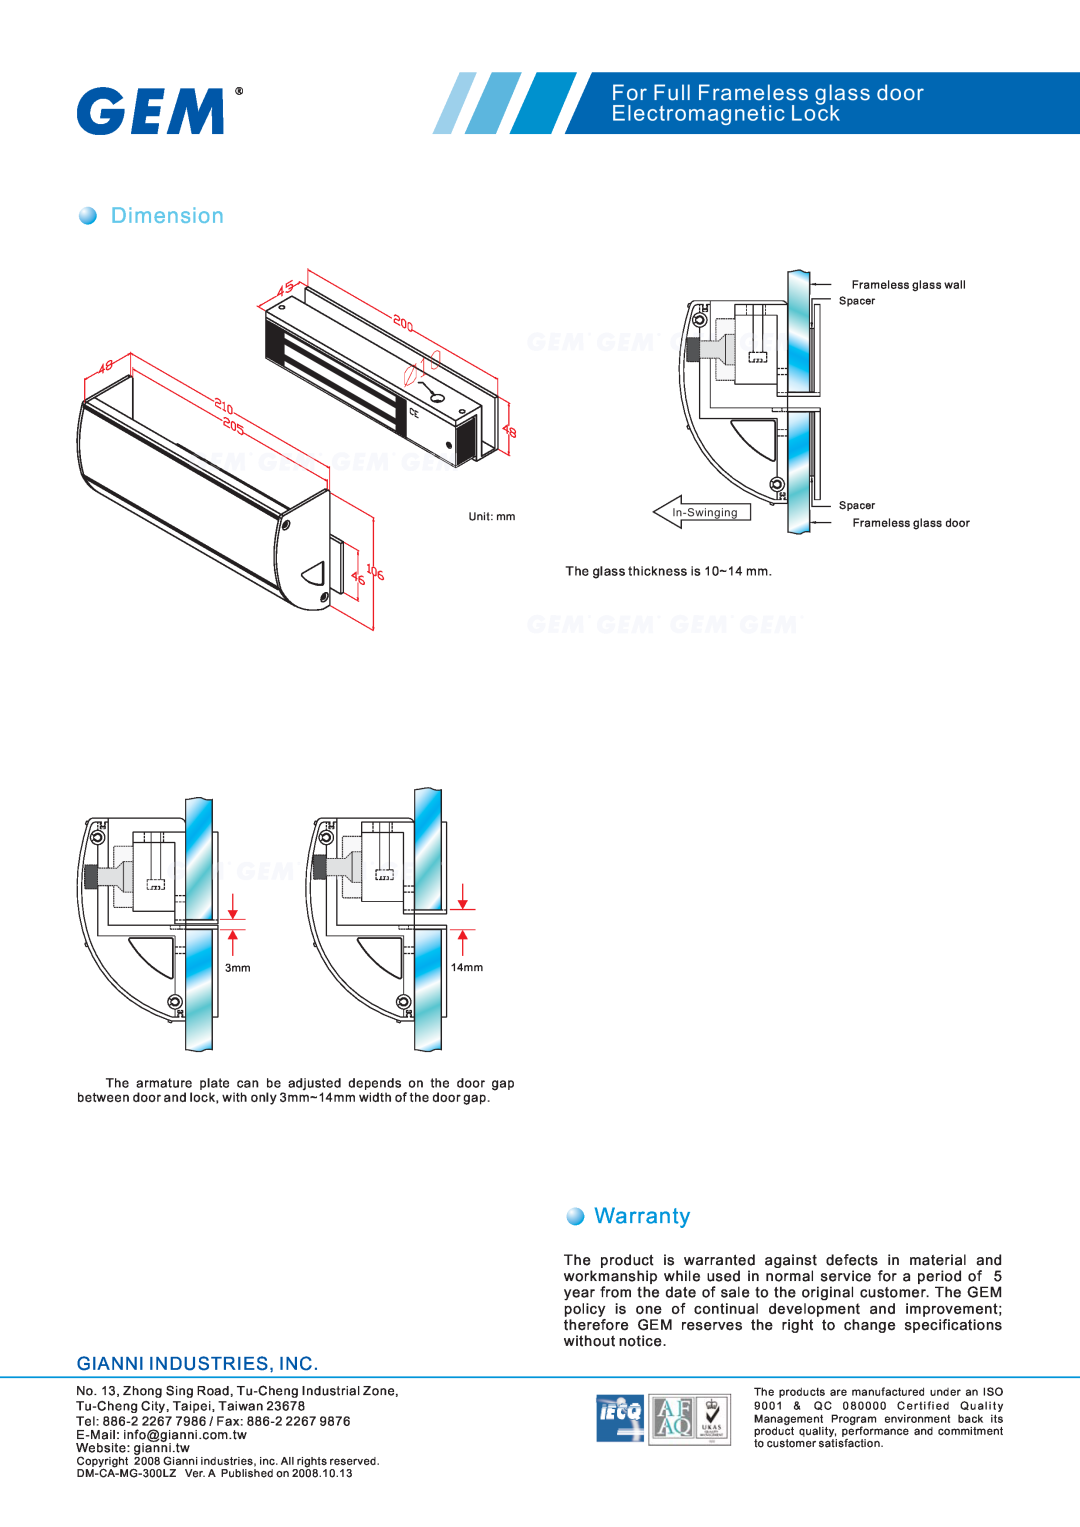 Gianni Industries warranty Dimension, For Full Frameless glass door Electromagnetic Lock, Warranty, Unit mm 